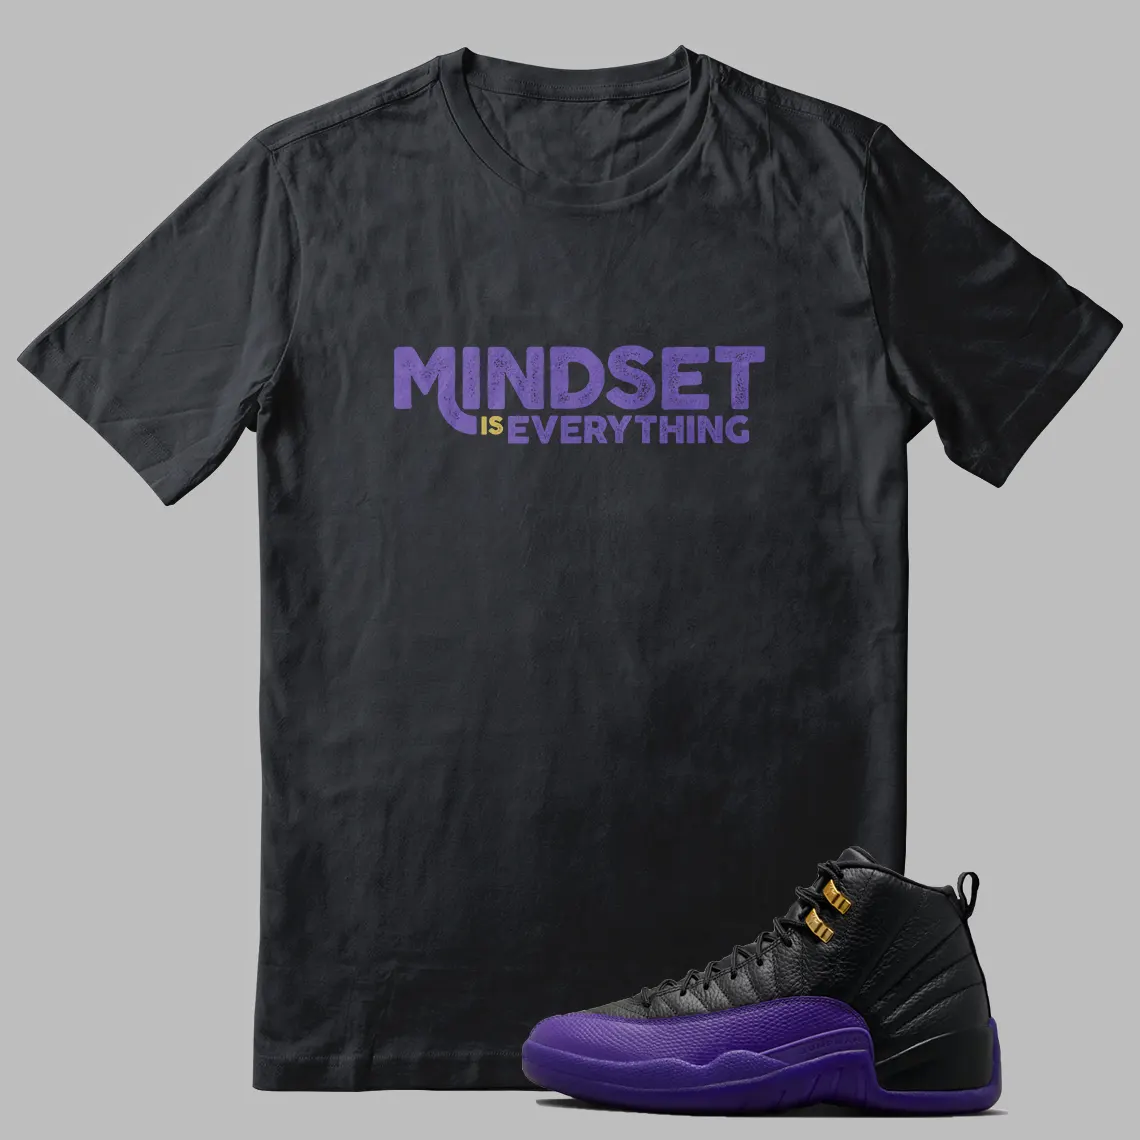 Jordan 12 Field Purple T-shirt Mindset Graphic